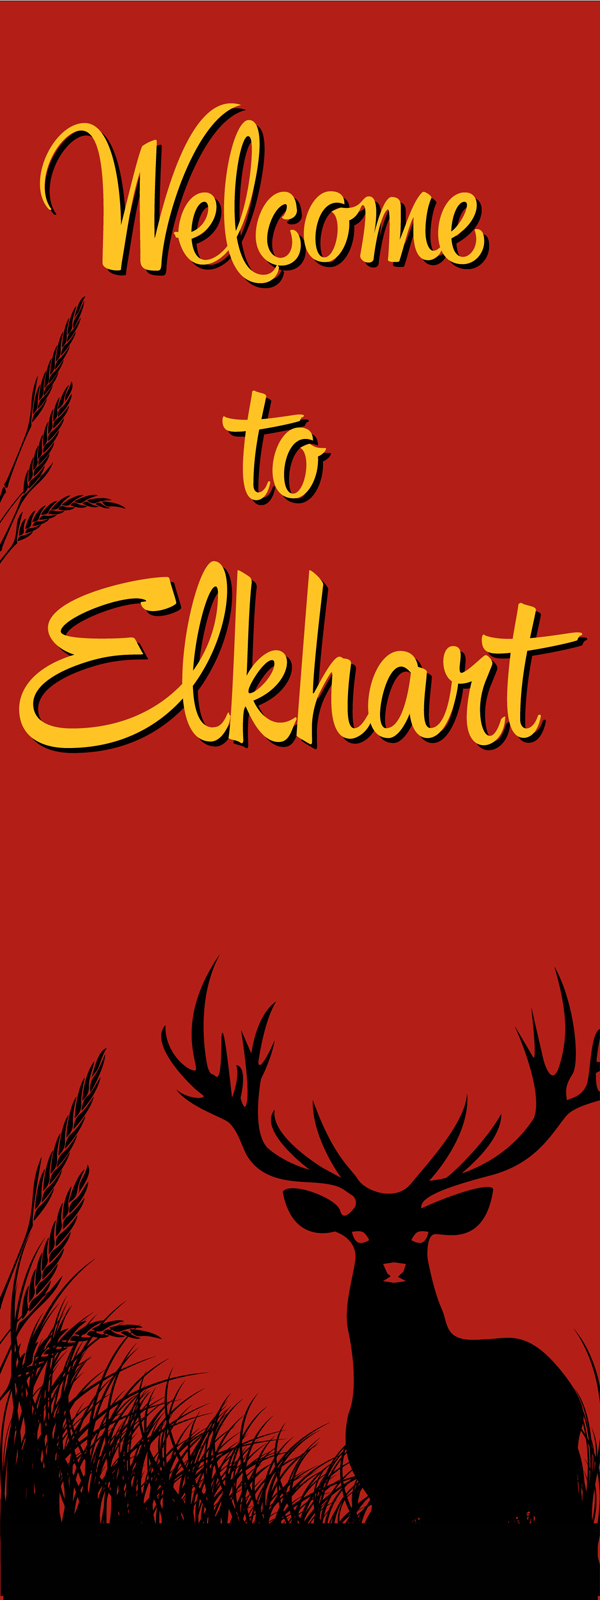 NLD-Elkhart Welcome TerraCotta Revised